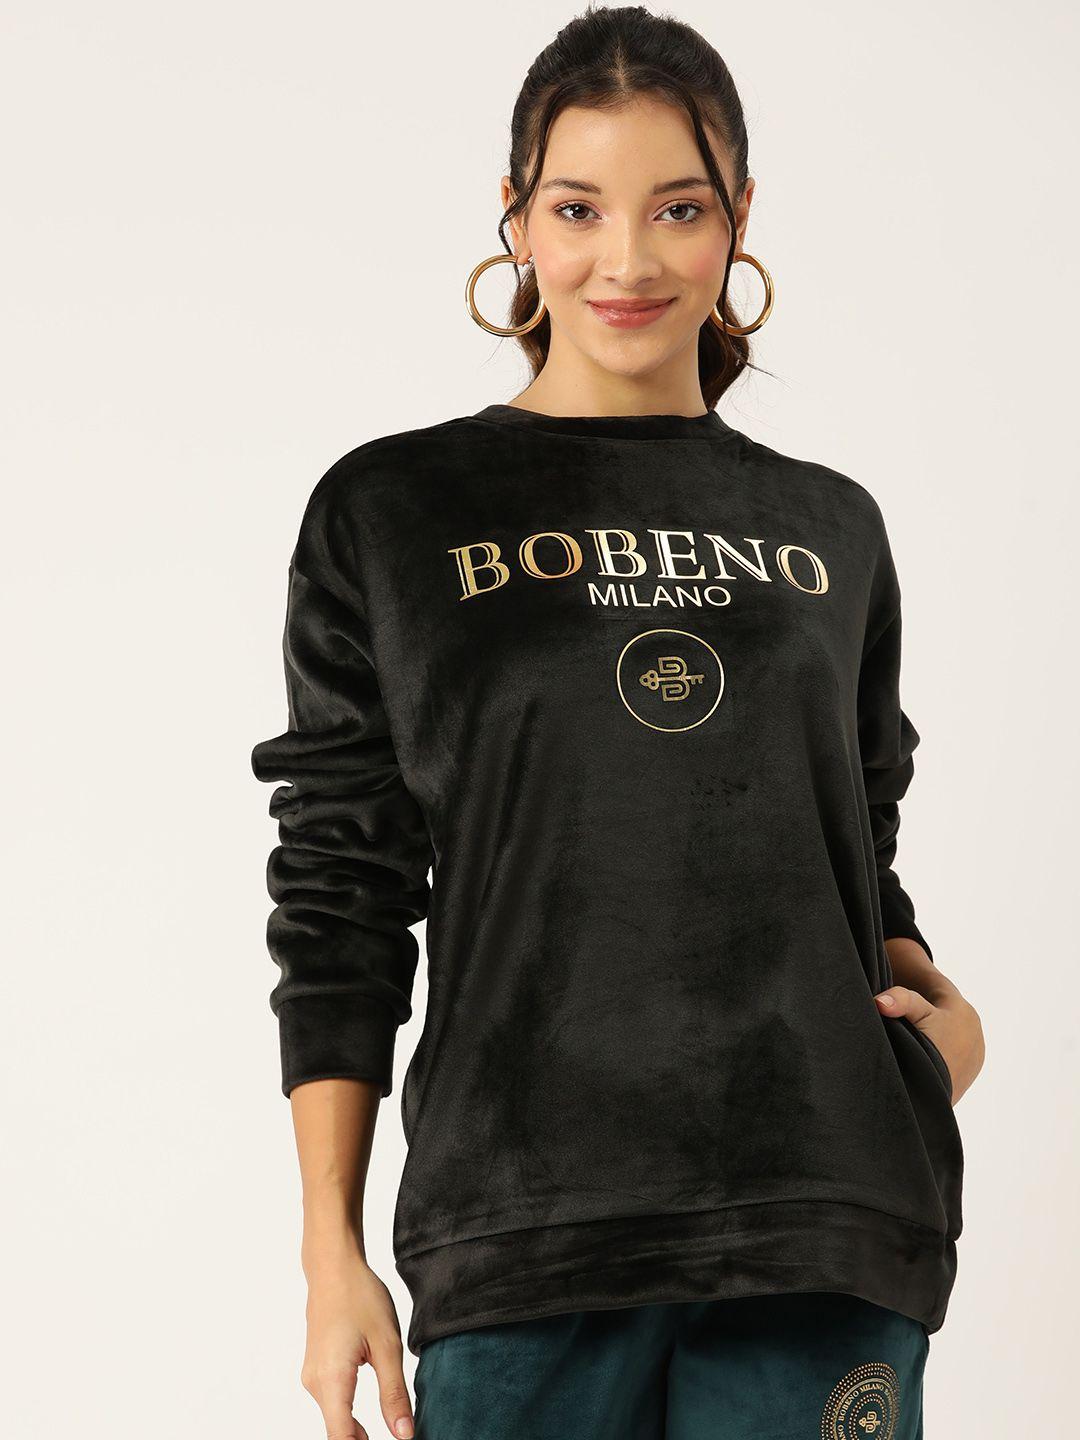 bobeno milano typography printed velvet longline sweatshirt